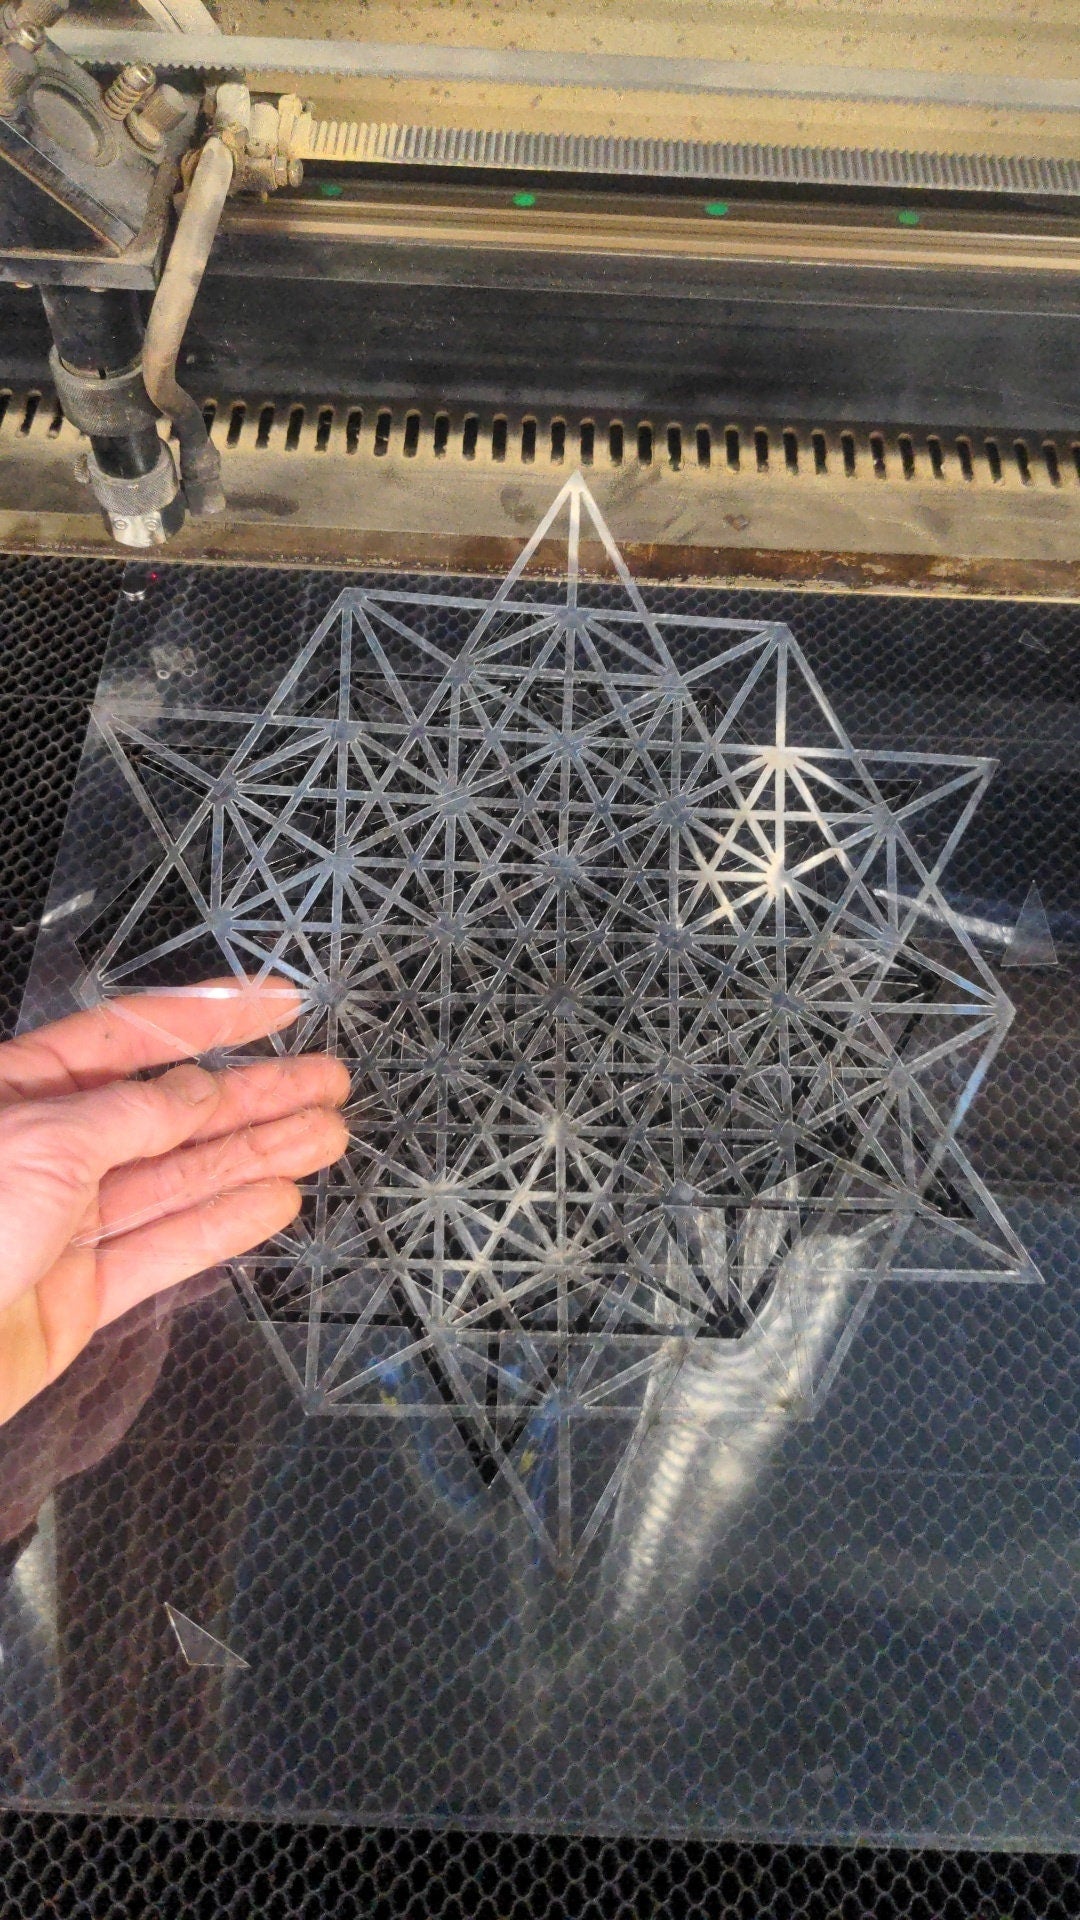 64 Tetrahedron Grid Stencil - Sacred Geometry